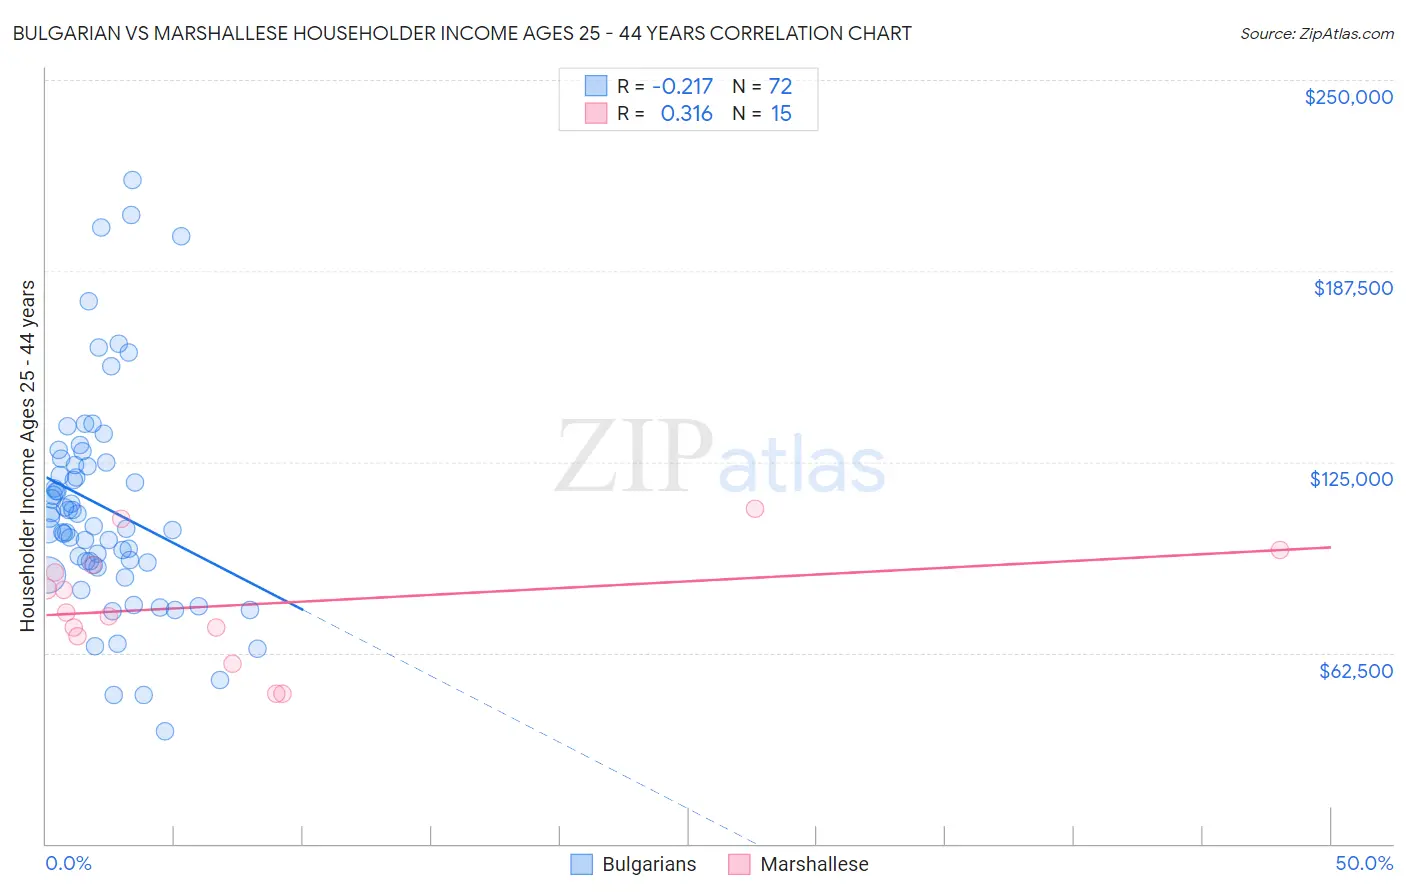 Bulgarian vs Marshallese Householder Income Ages 25 - 44 years